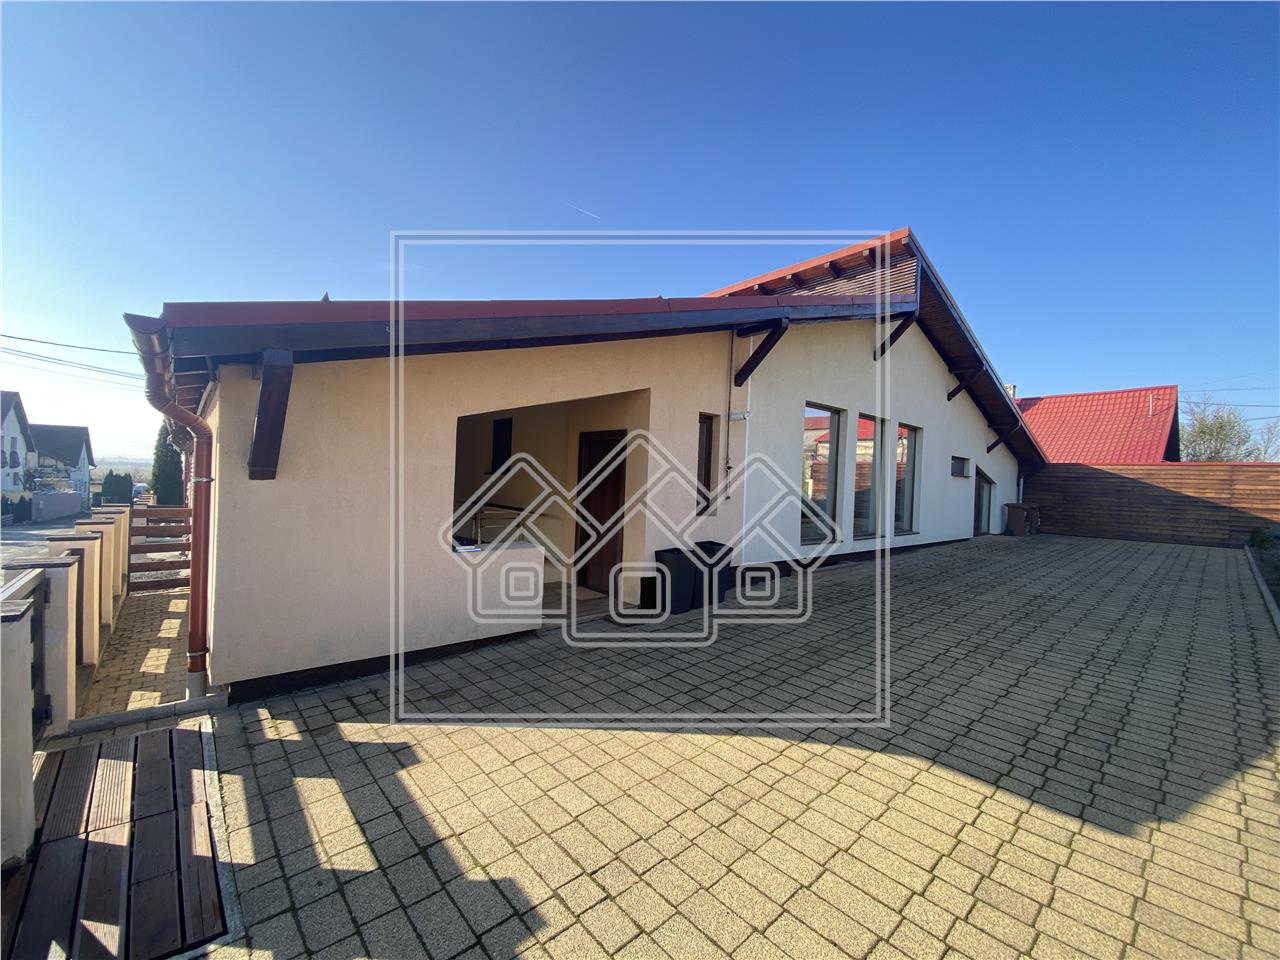 House for sale in Sibiu - duplex type - 240 usable sqm - Viile Sibiulu